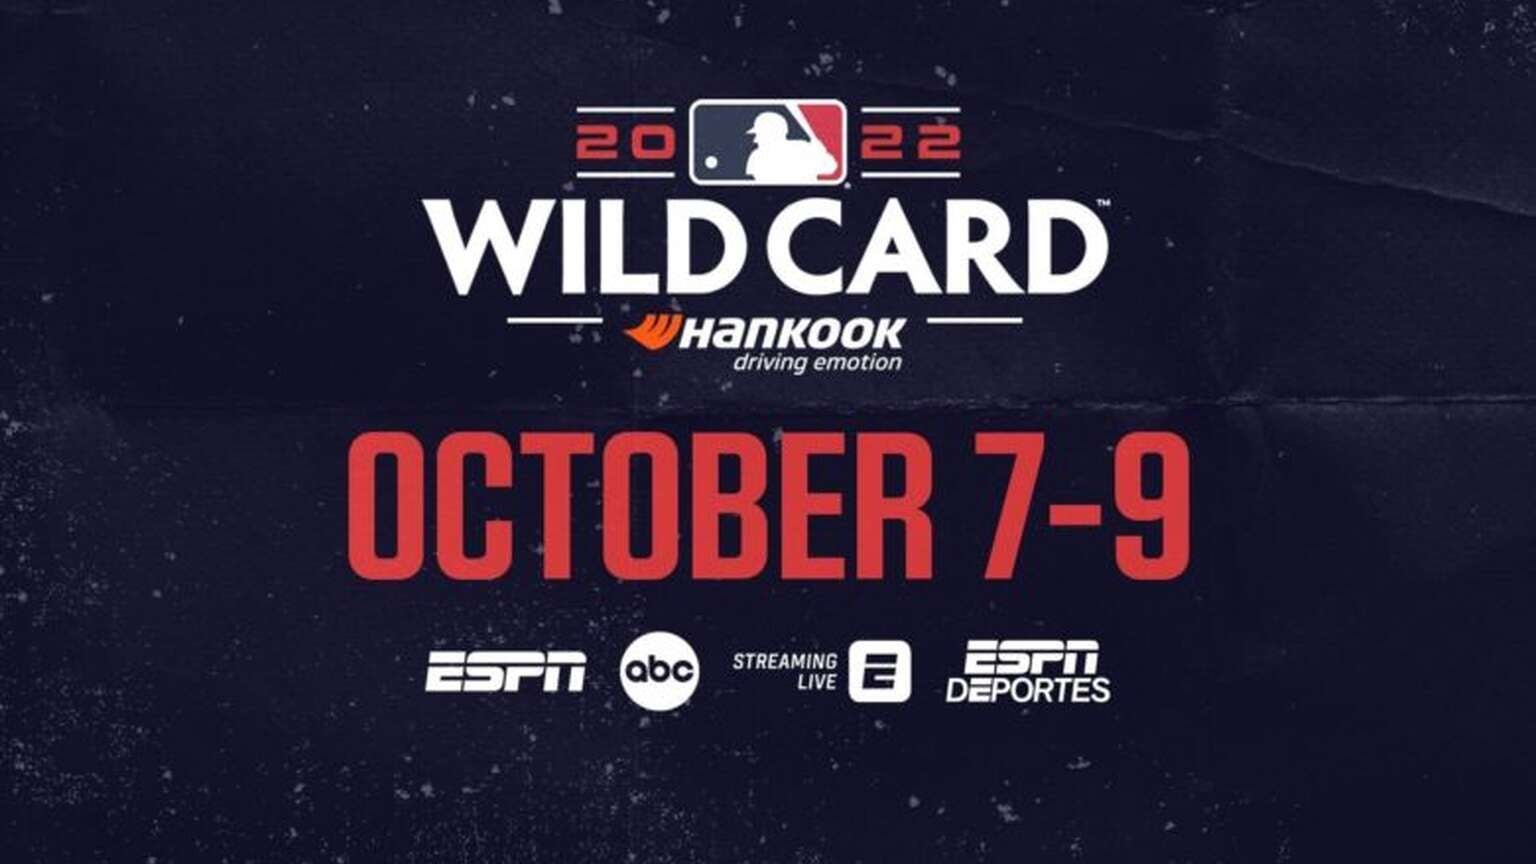 How to Watch the 2022 Major League Baseball AL, NL Wild Card Series